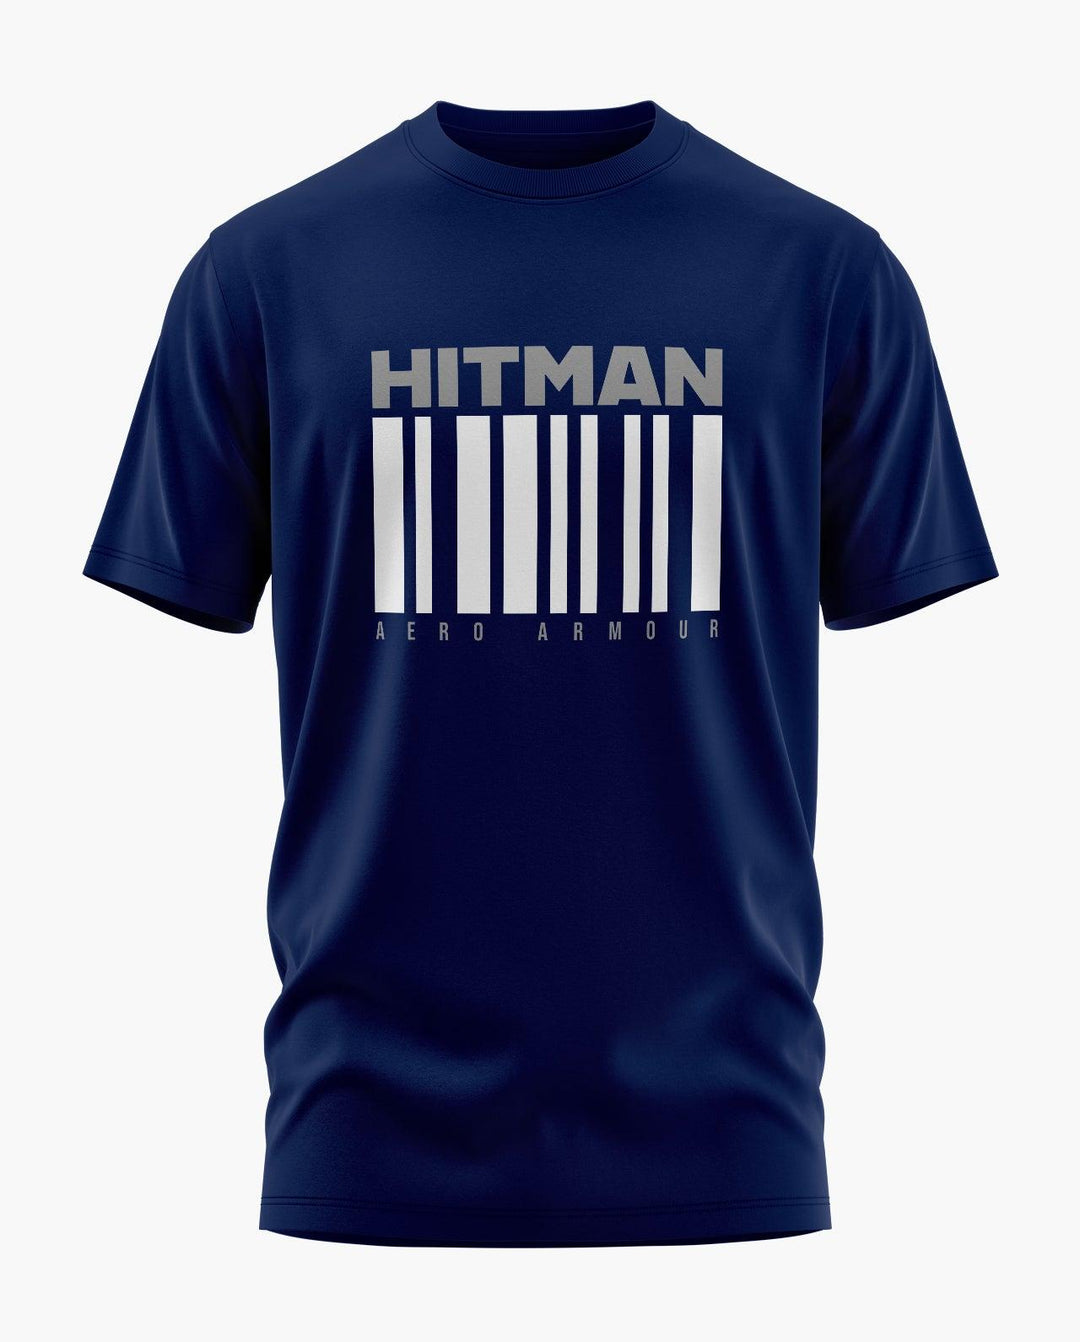 Hitman T-Shirt - Aero Armour